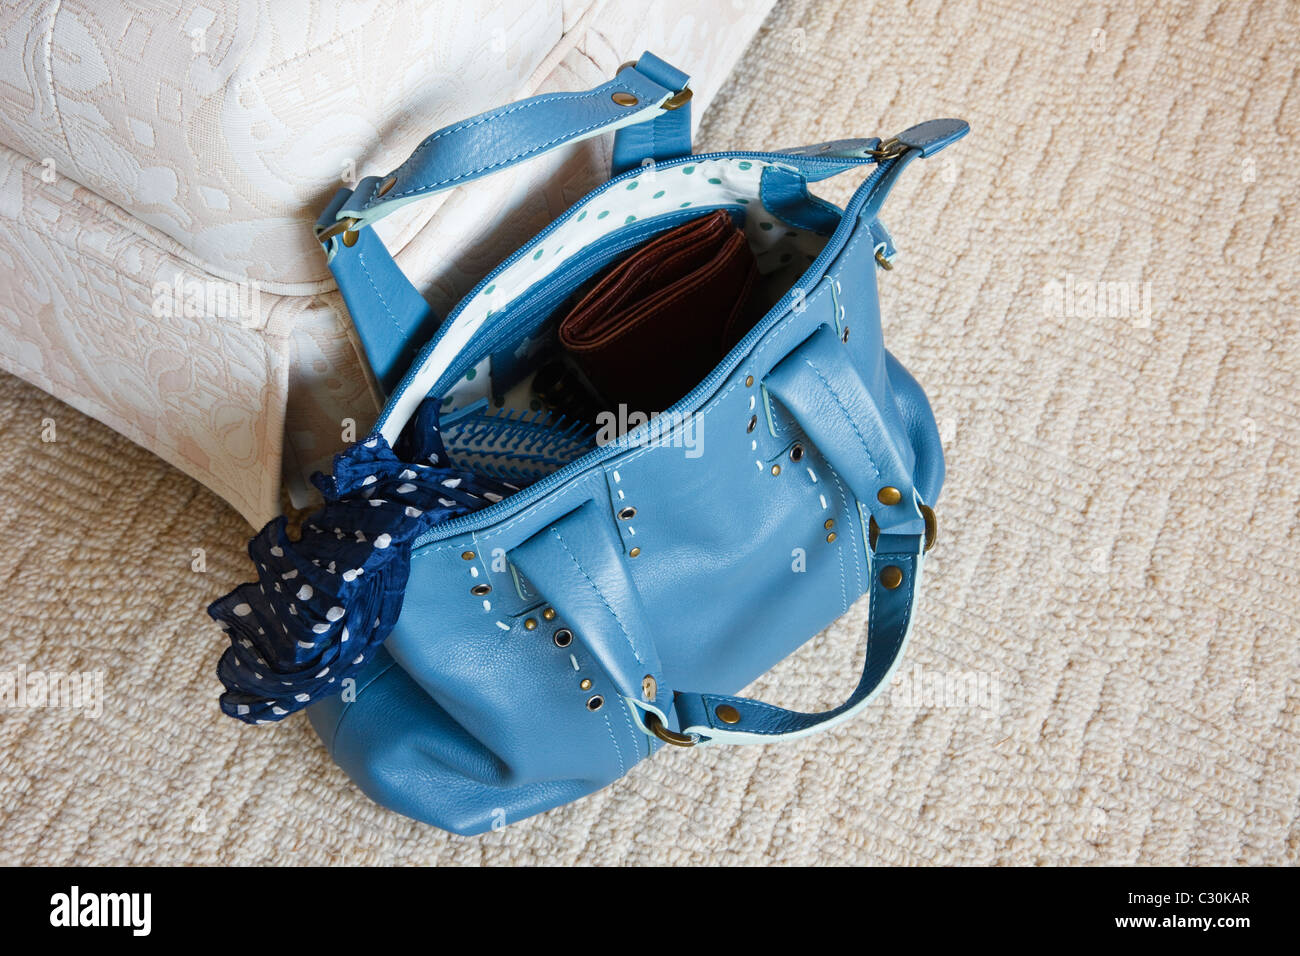 Handbags. Fashion bag set. Female purse accessory - Stock Illustration  [32562984] - PIXTA